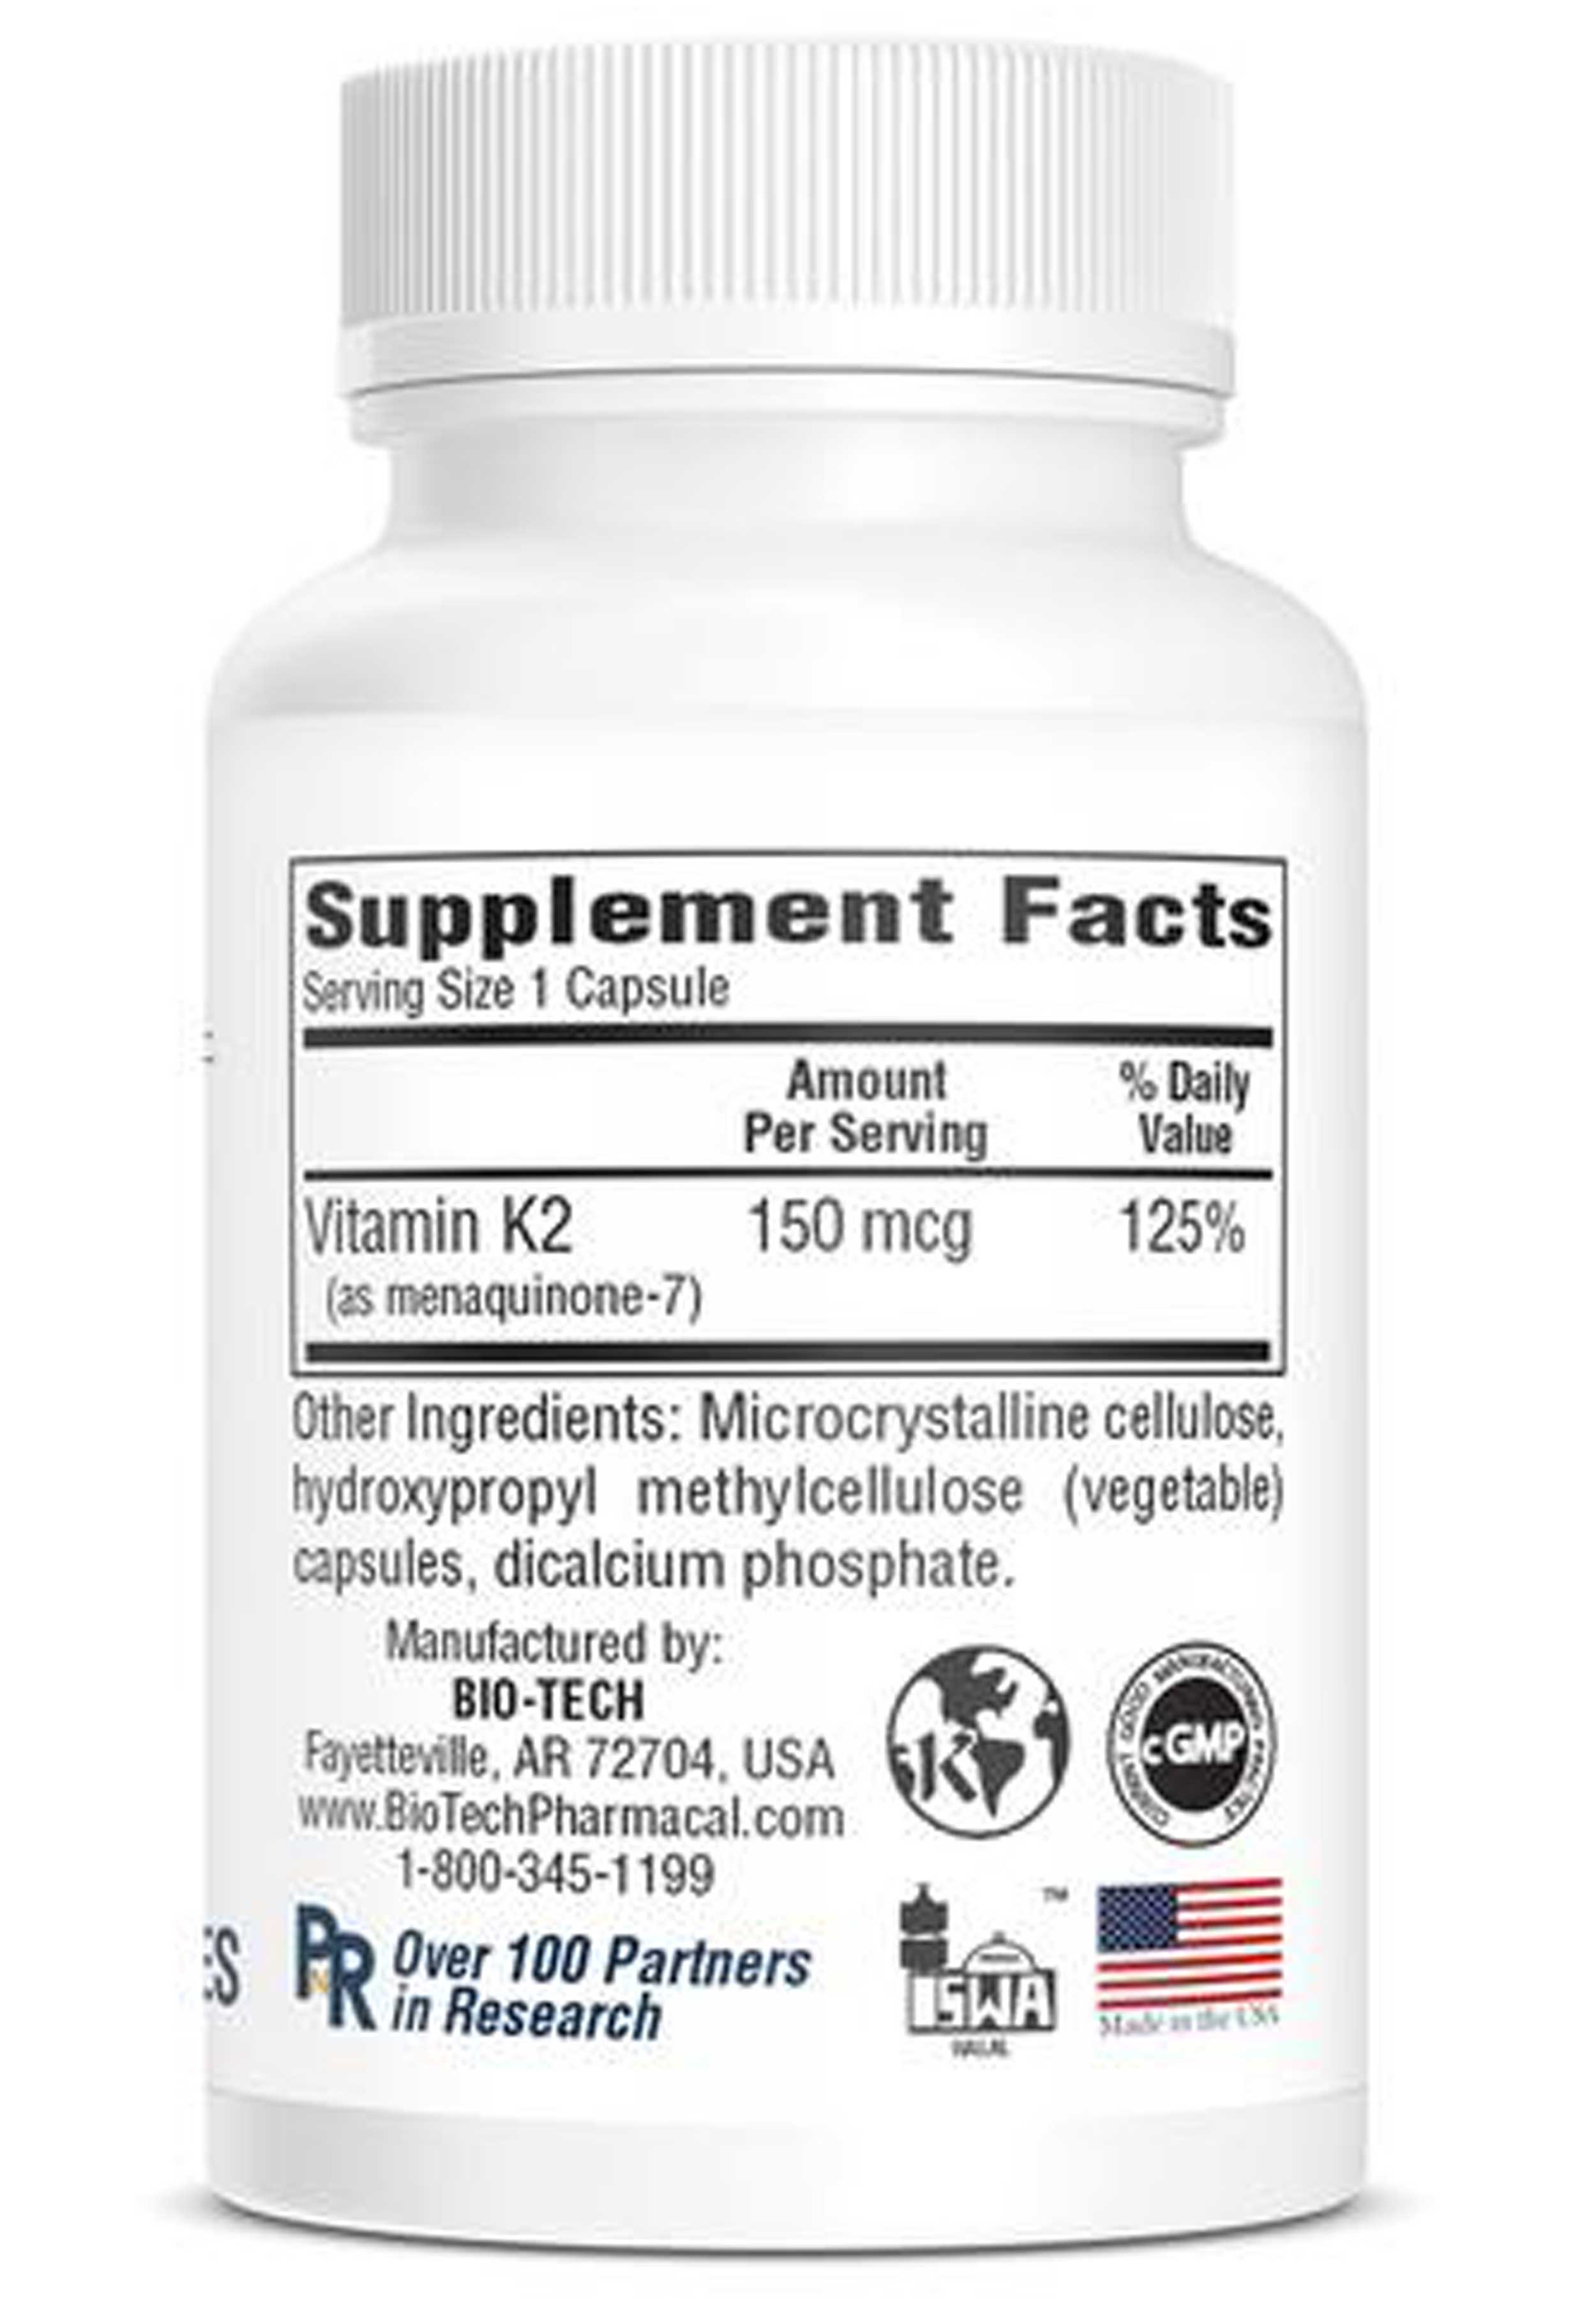 Bio-Tech Pharmacal MK-7 (Vitamin K2) Ingredients